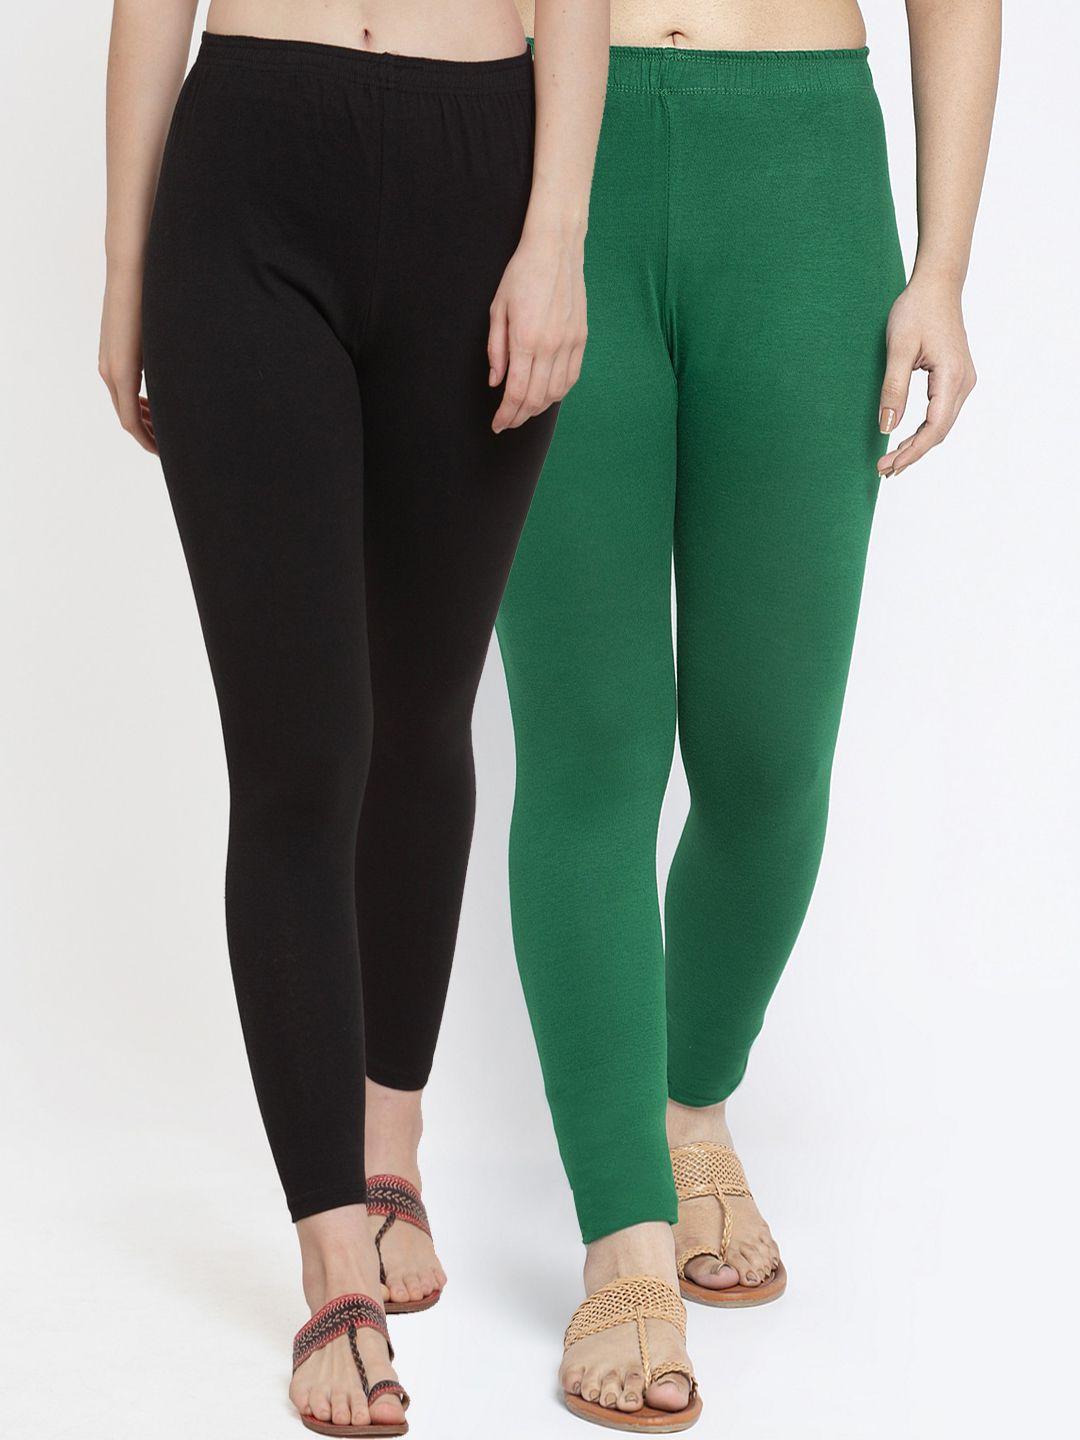 gracit women pack of 2 black & green solid ankle-length cotton lycra leggings